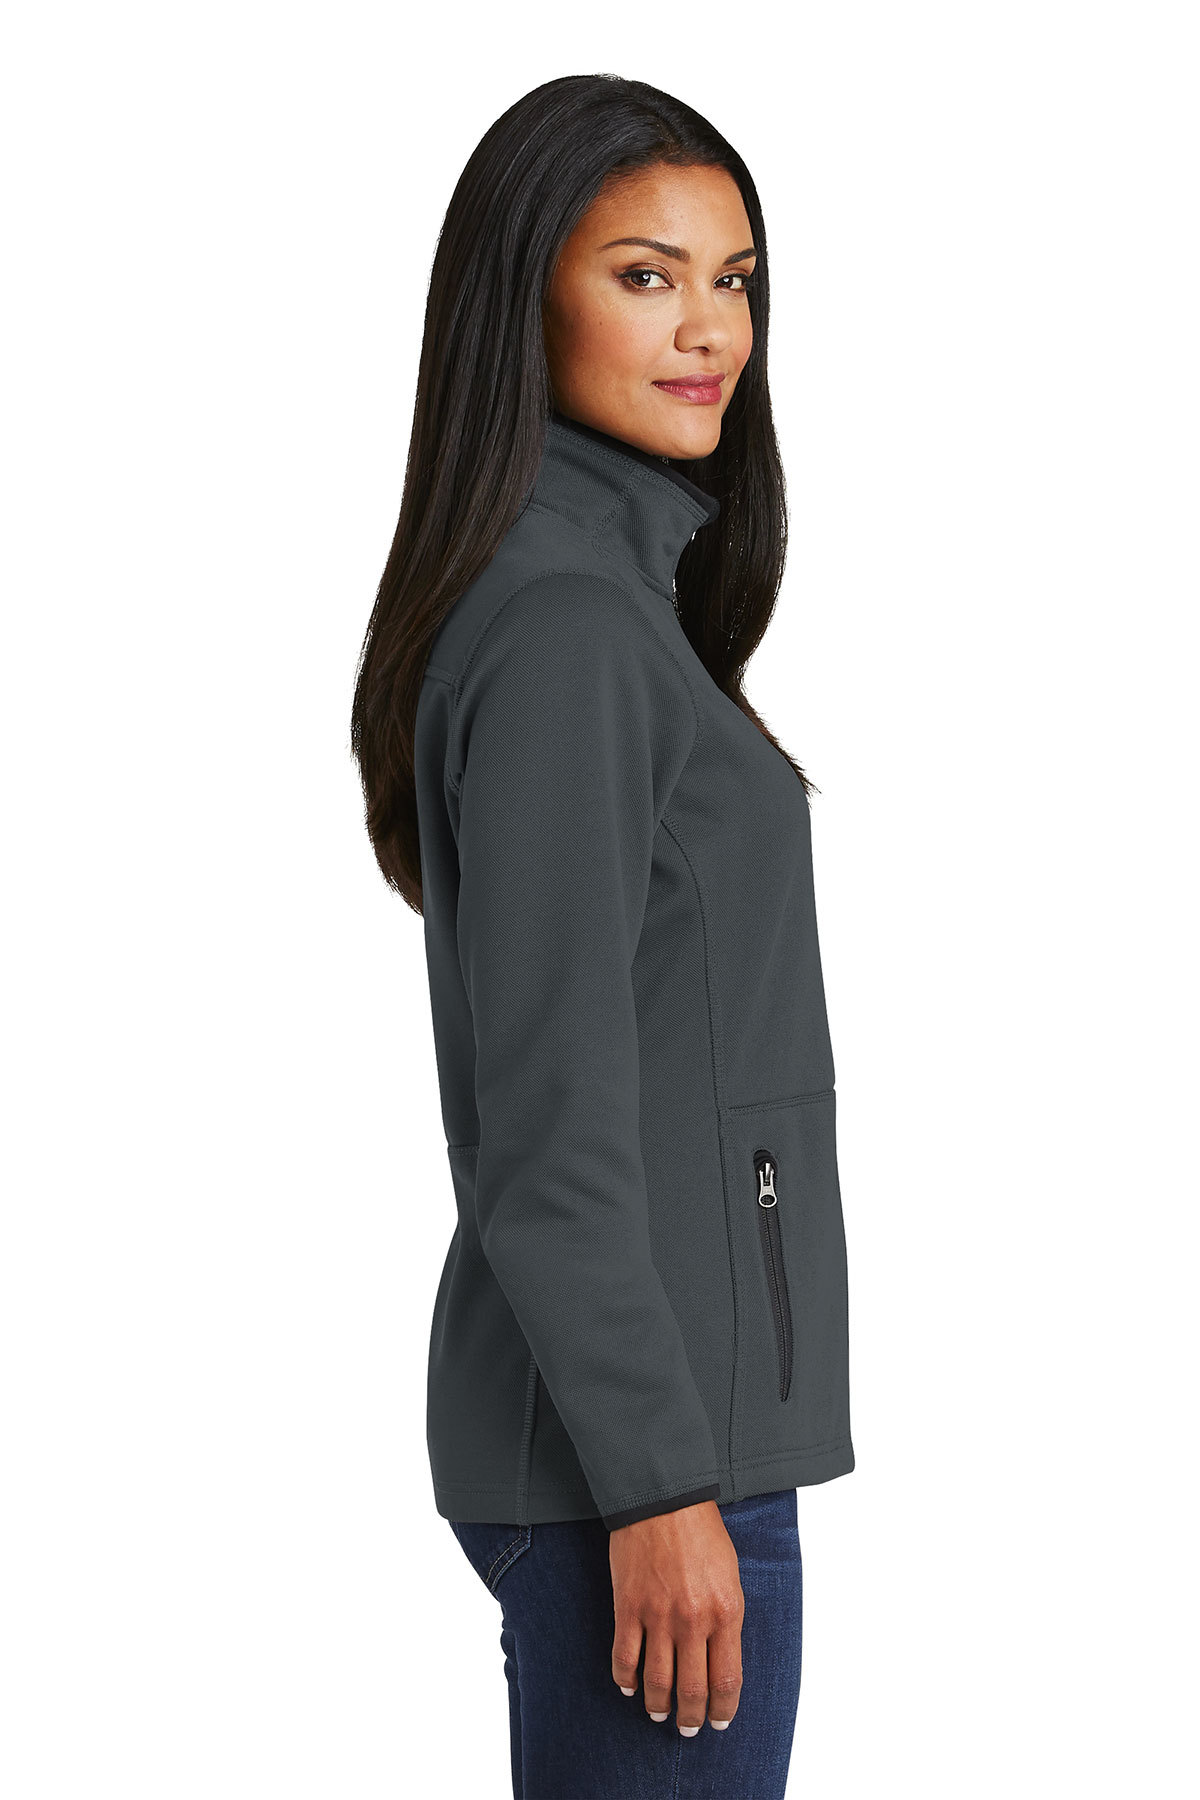 Port Authority Ladies Pique Fleece Jacket | Product | Company Casuals